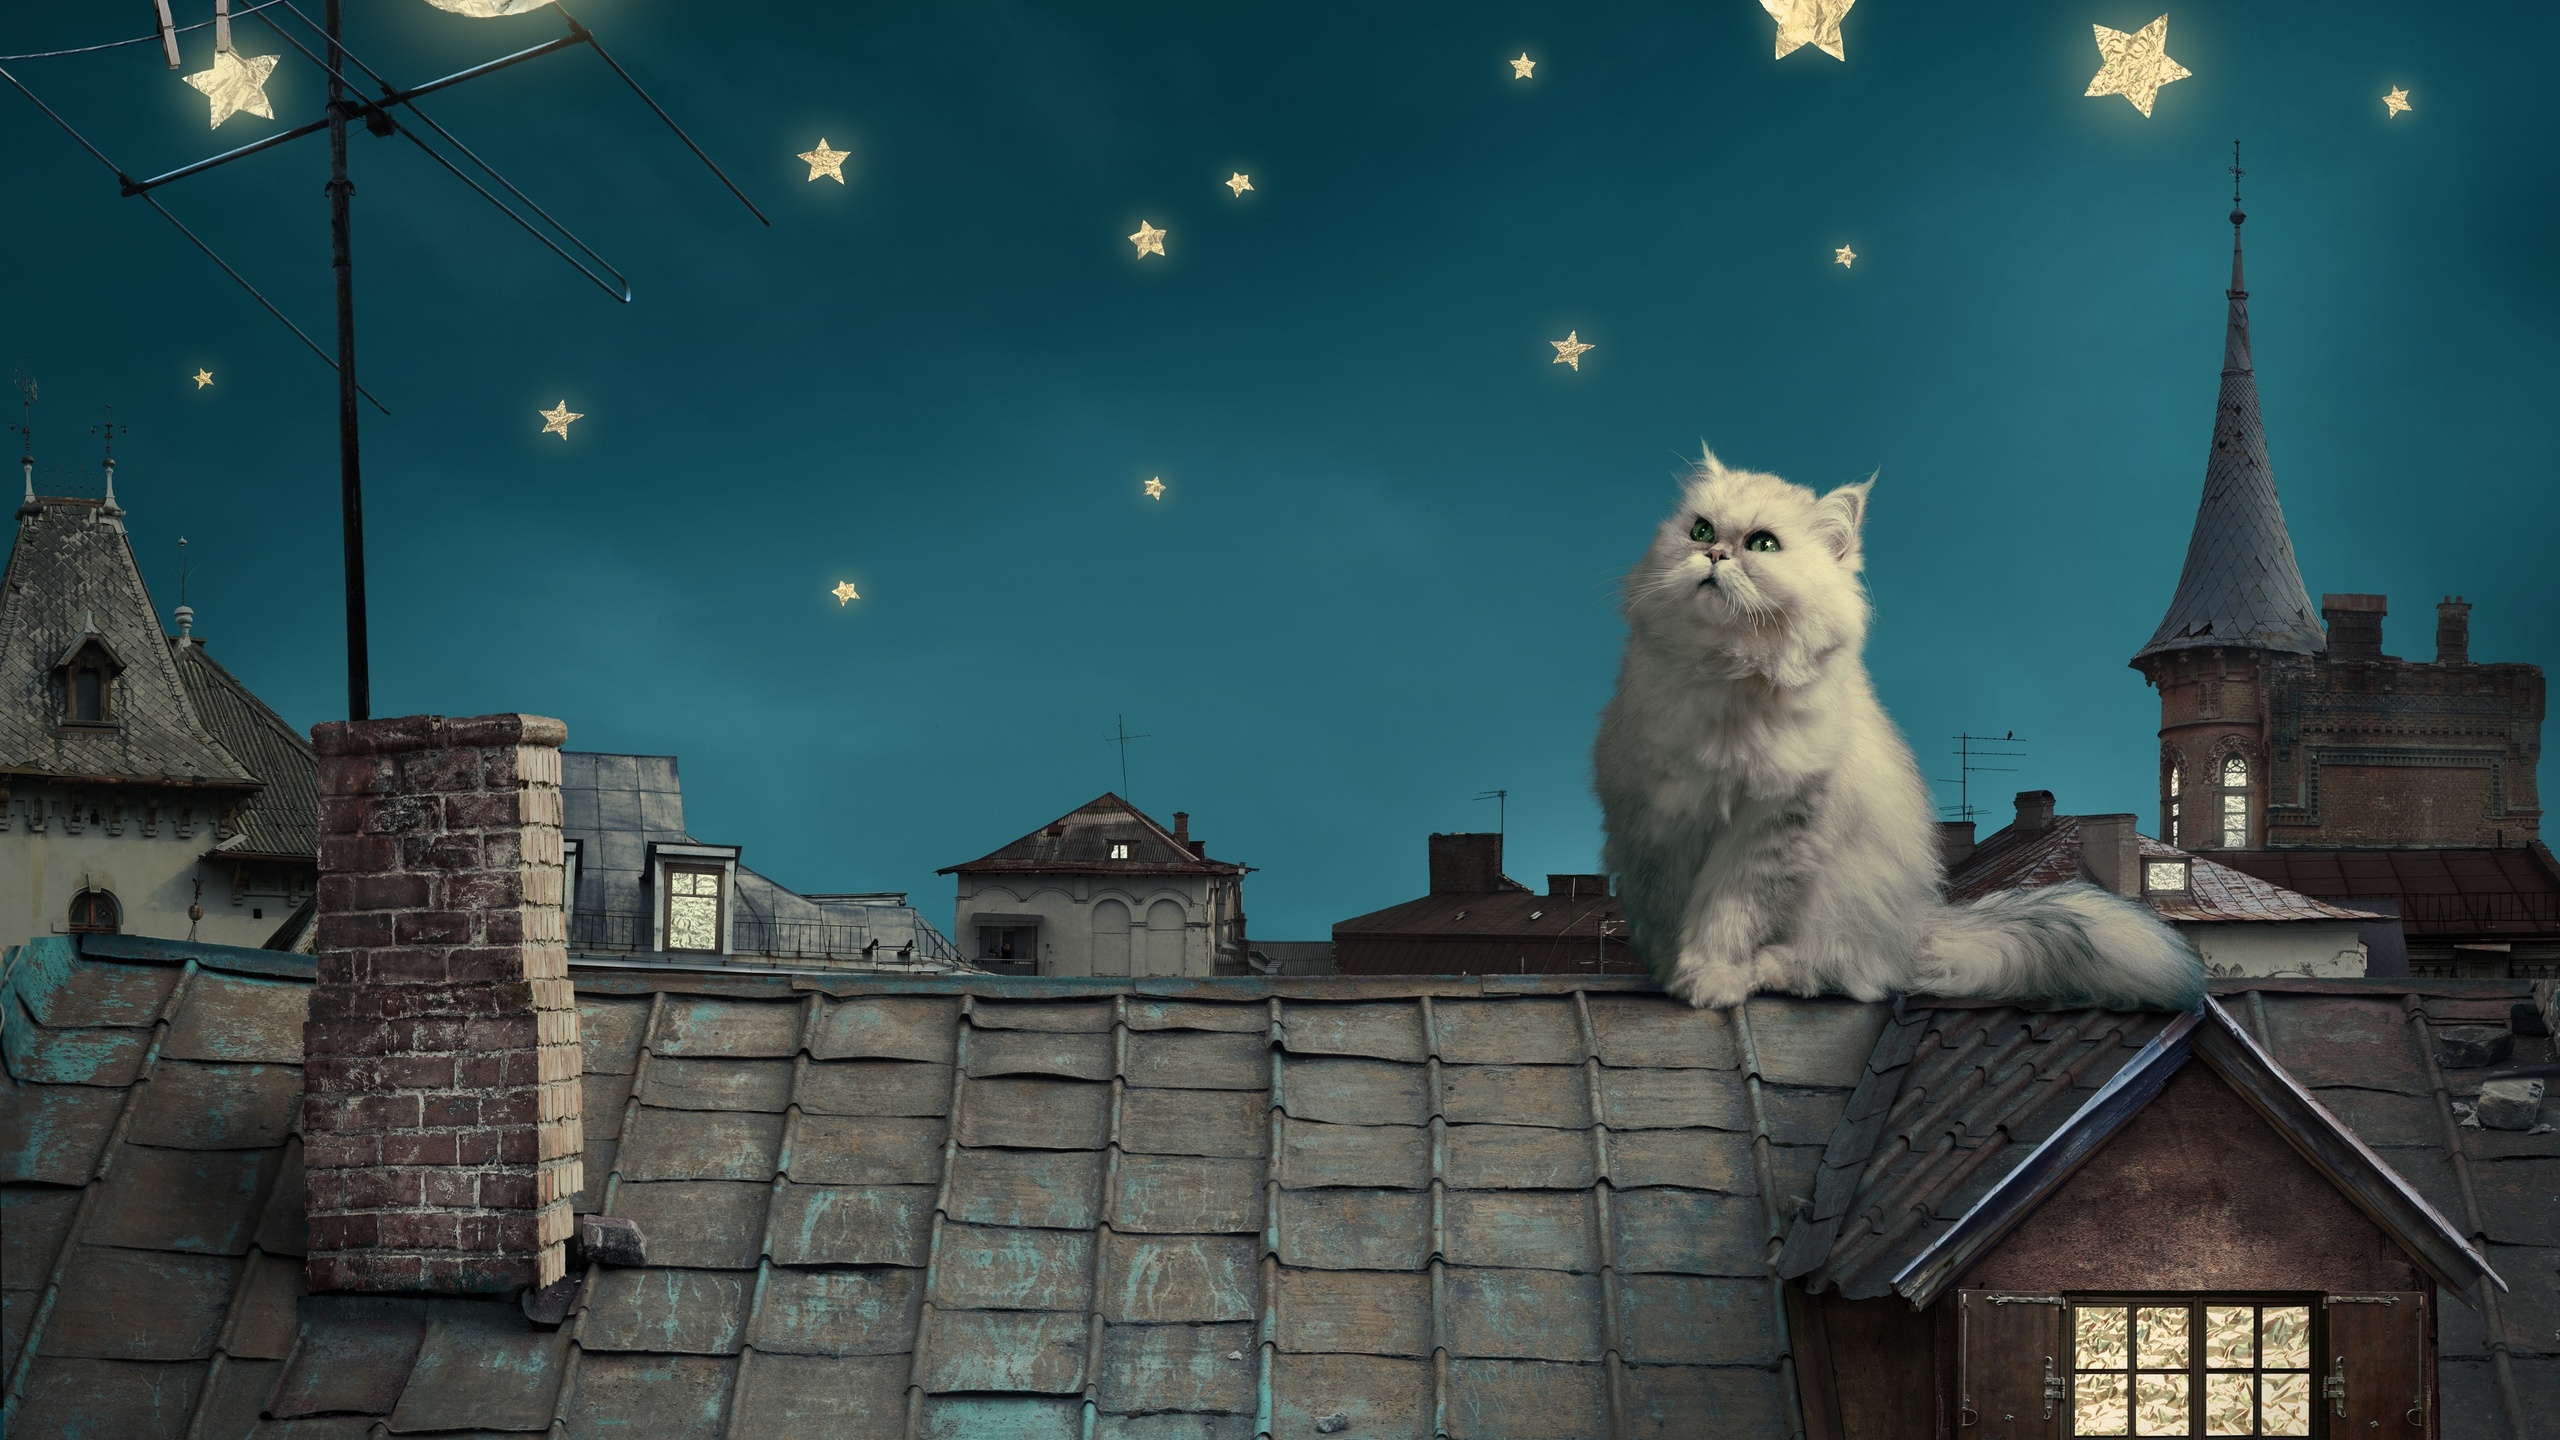 kitten, fairytale, stars, house, moon, Persian white cat, night, fantasy, roof, sky